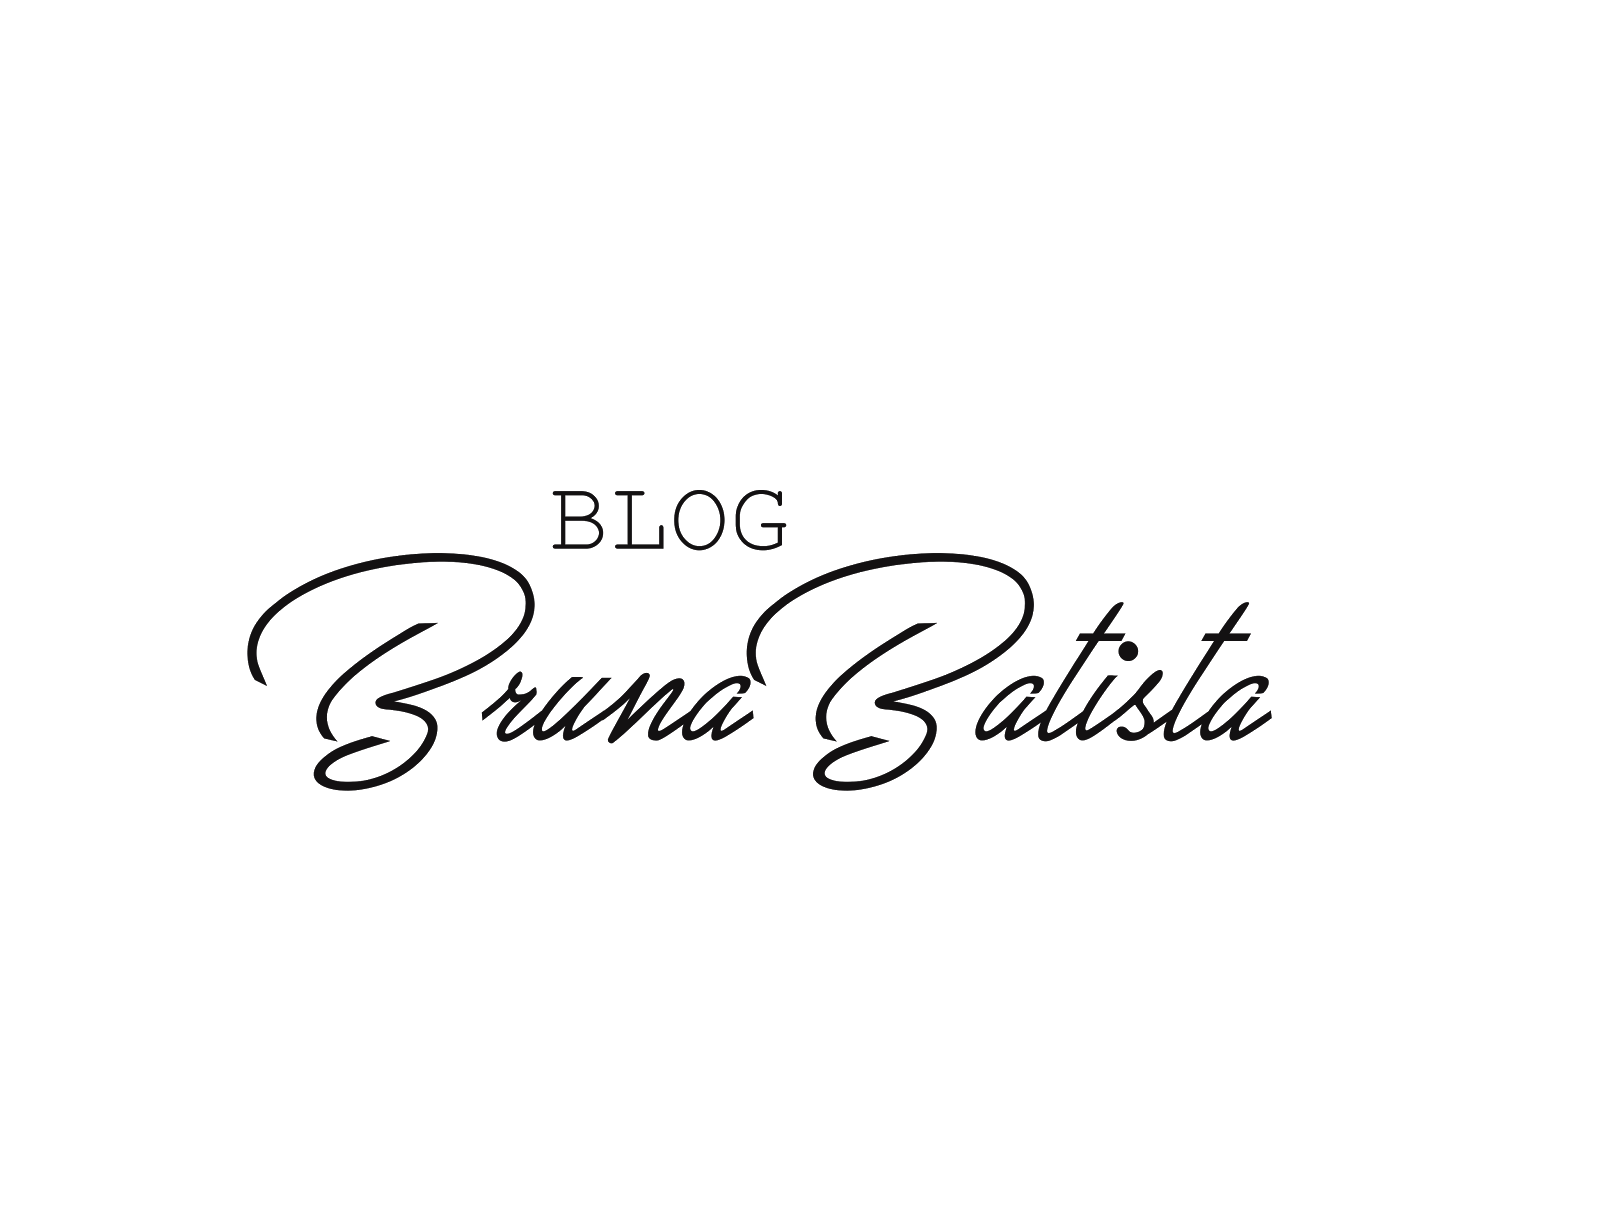 Blog Bruna Batista